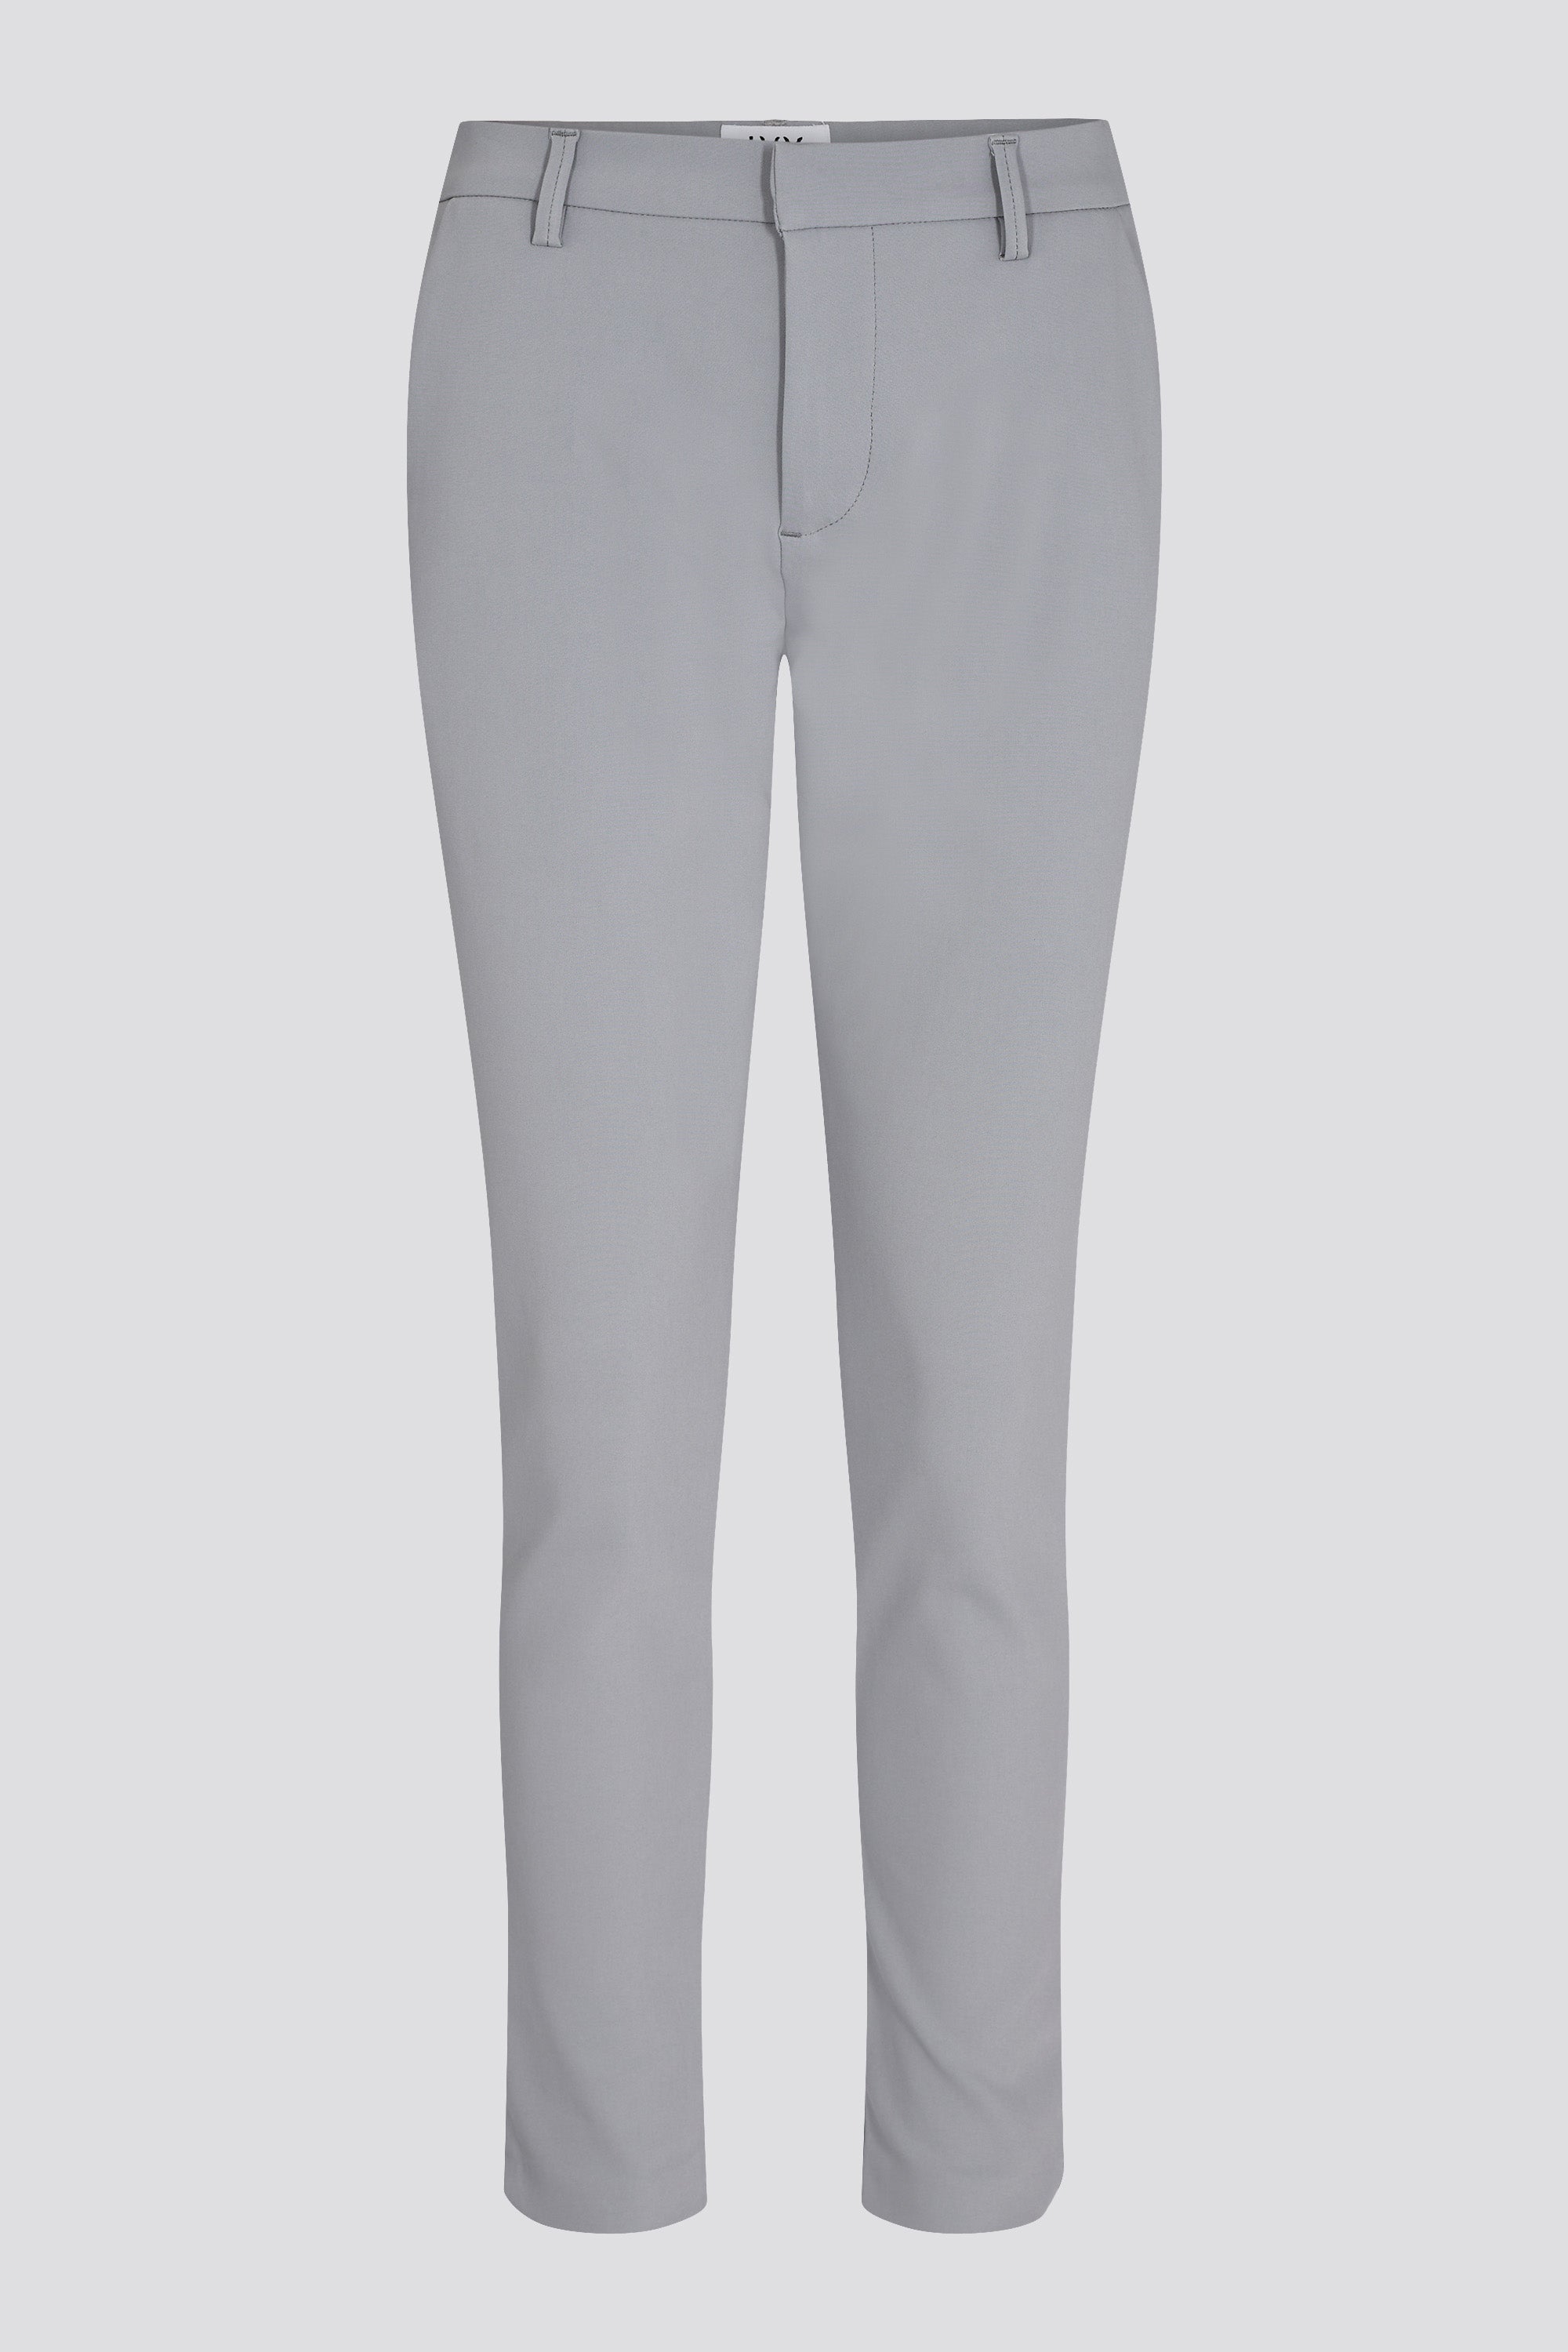 JRB Women's Golf Dry-Fit Trousers - Light Grey